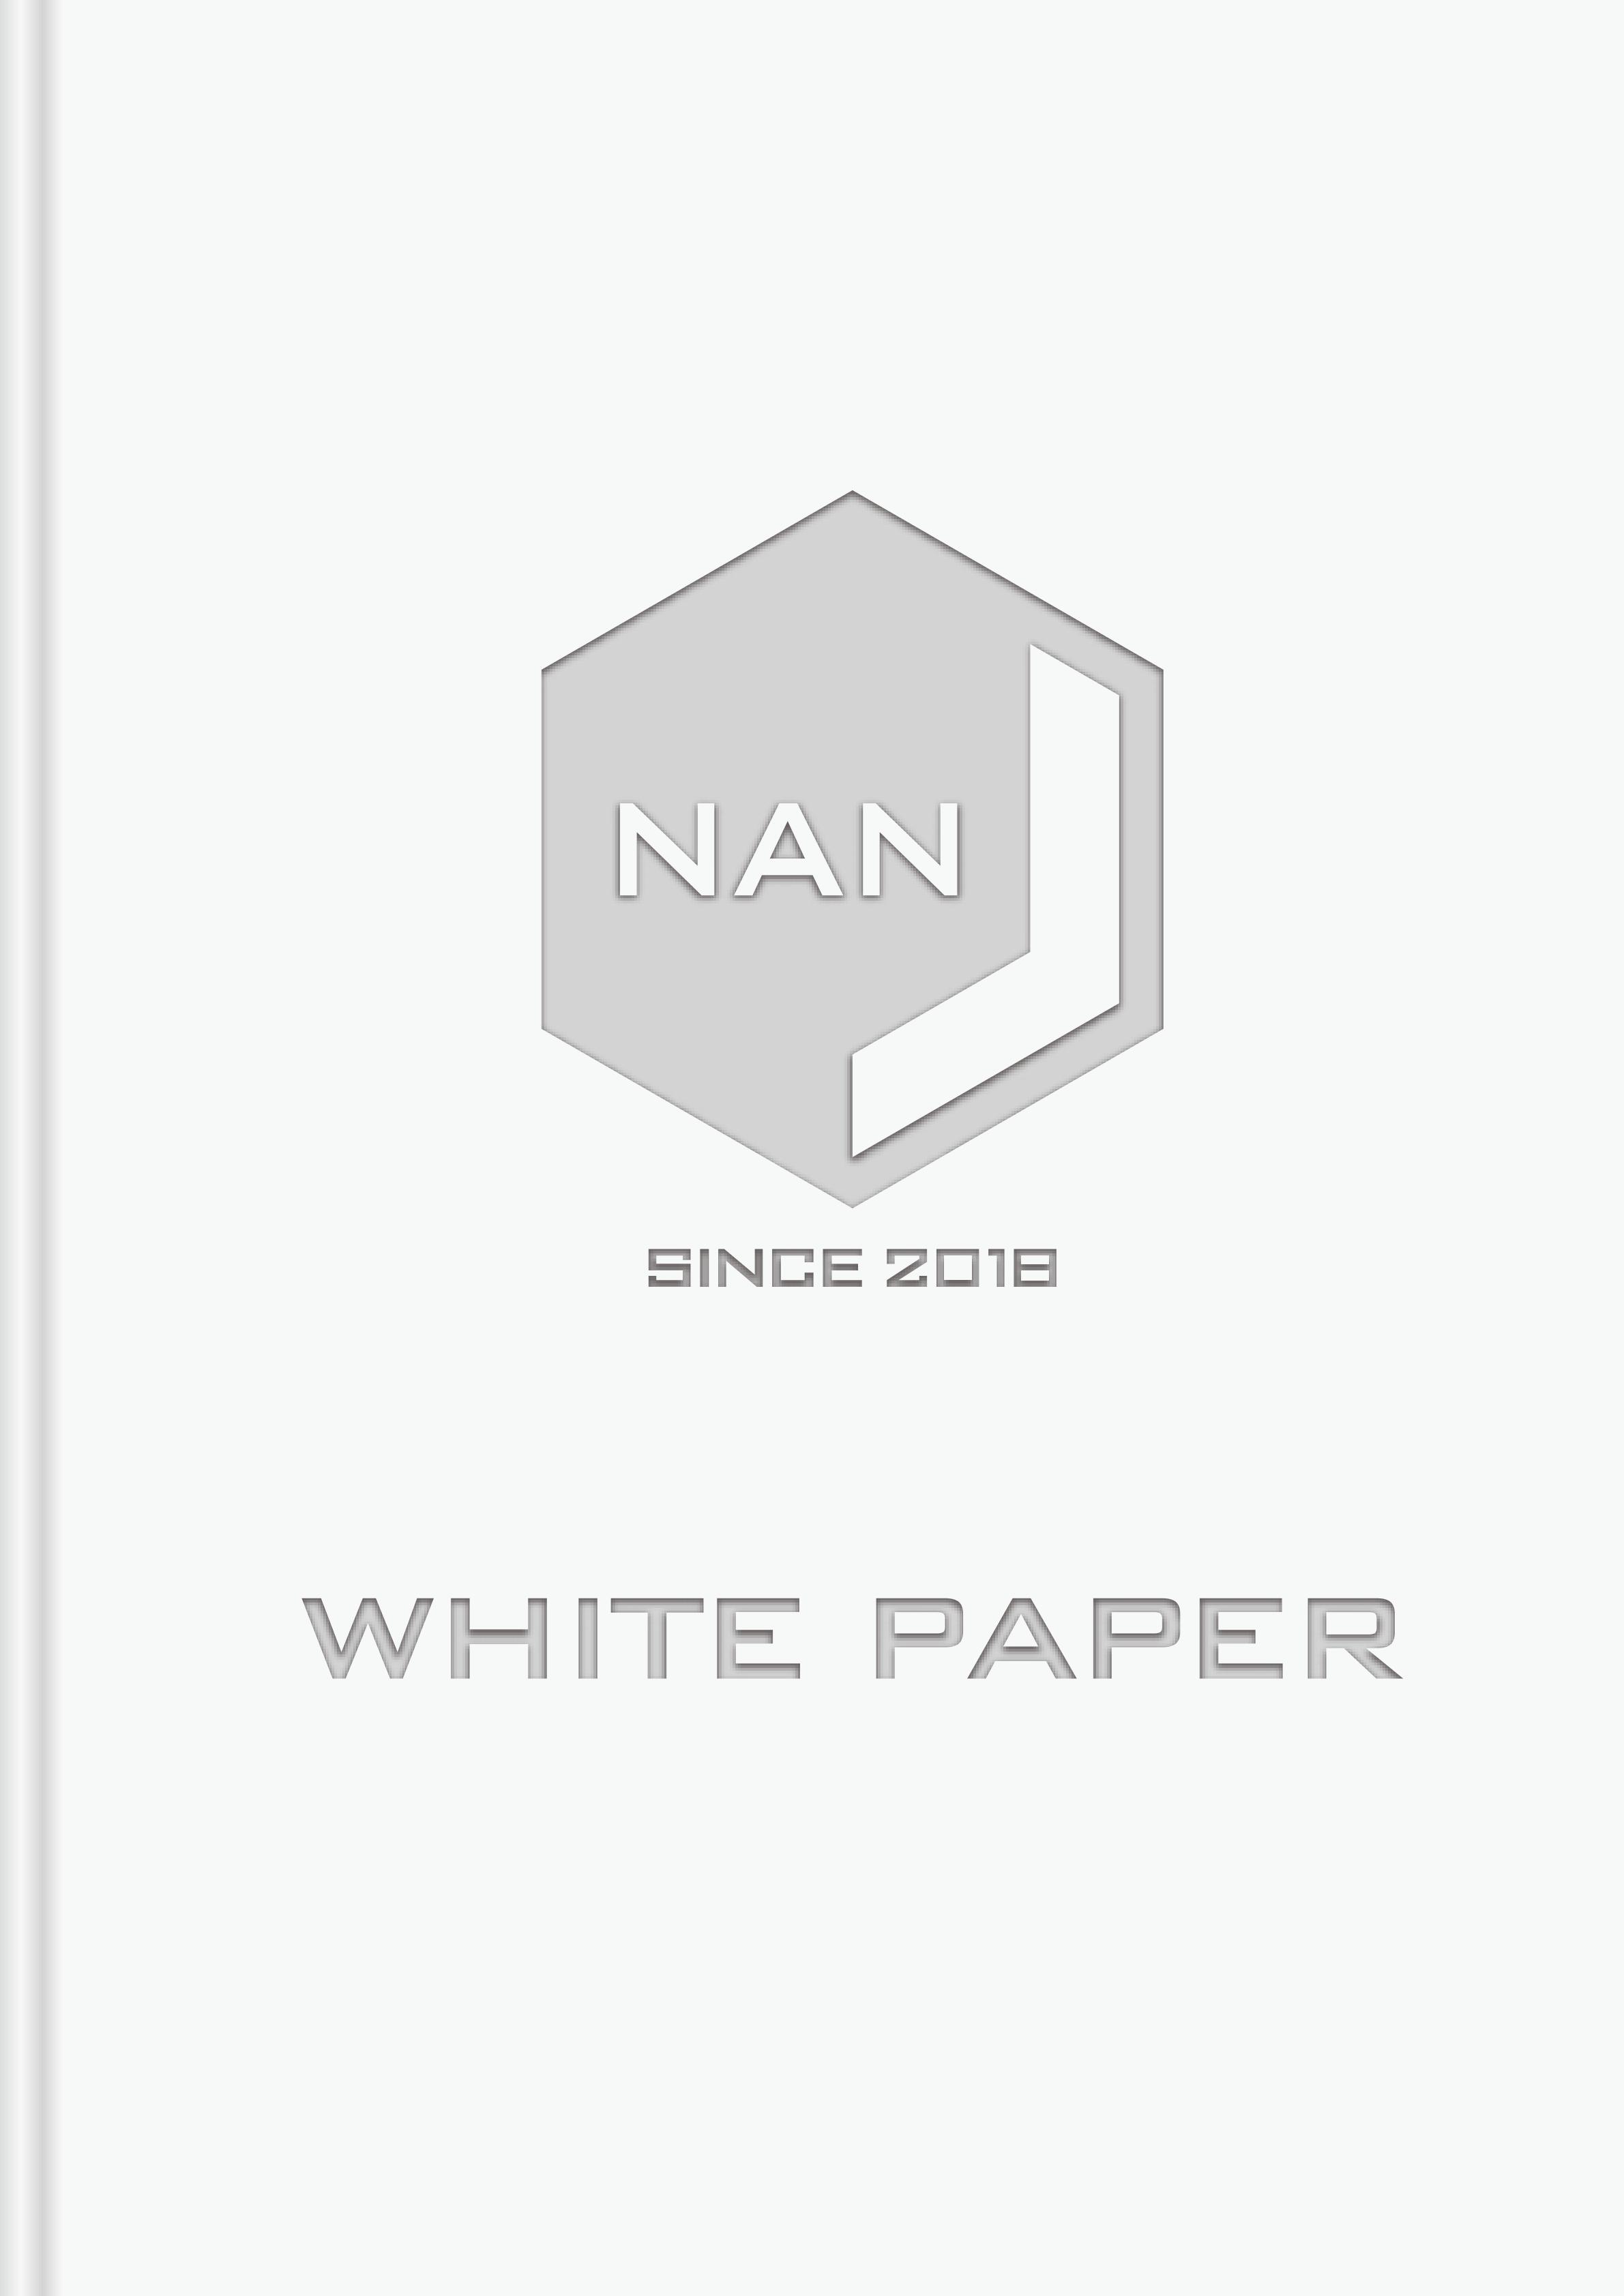 NANJ_white_paper_en_00.jpg